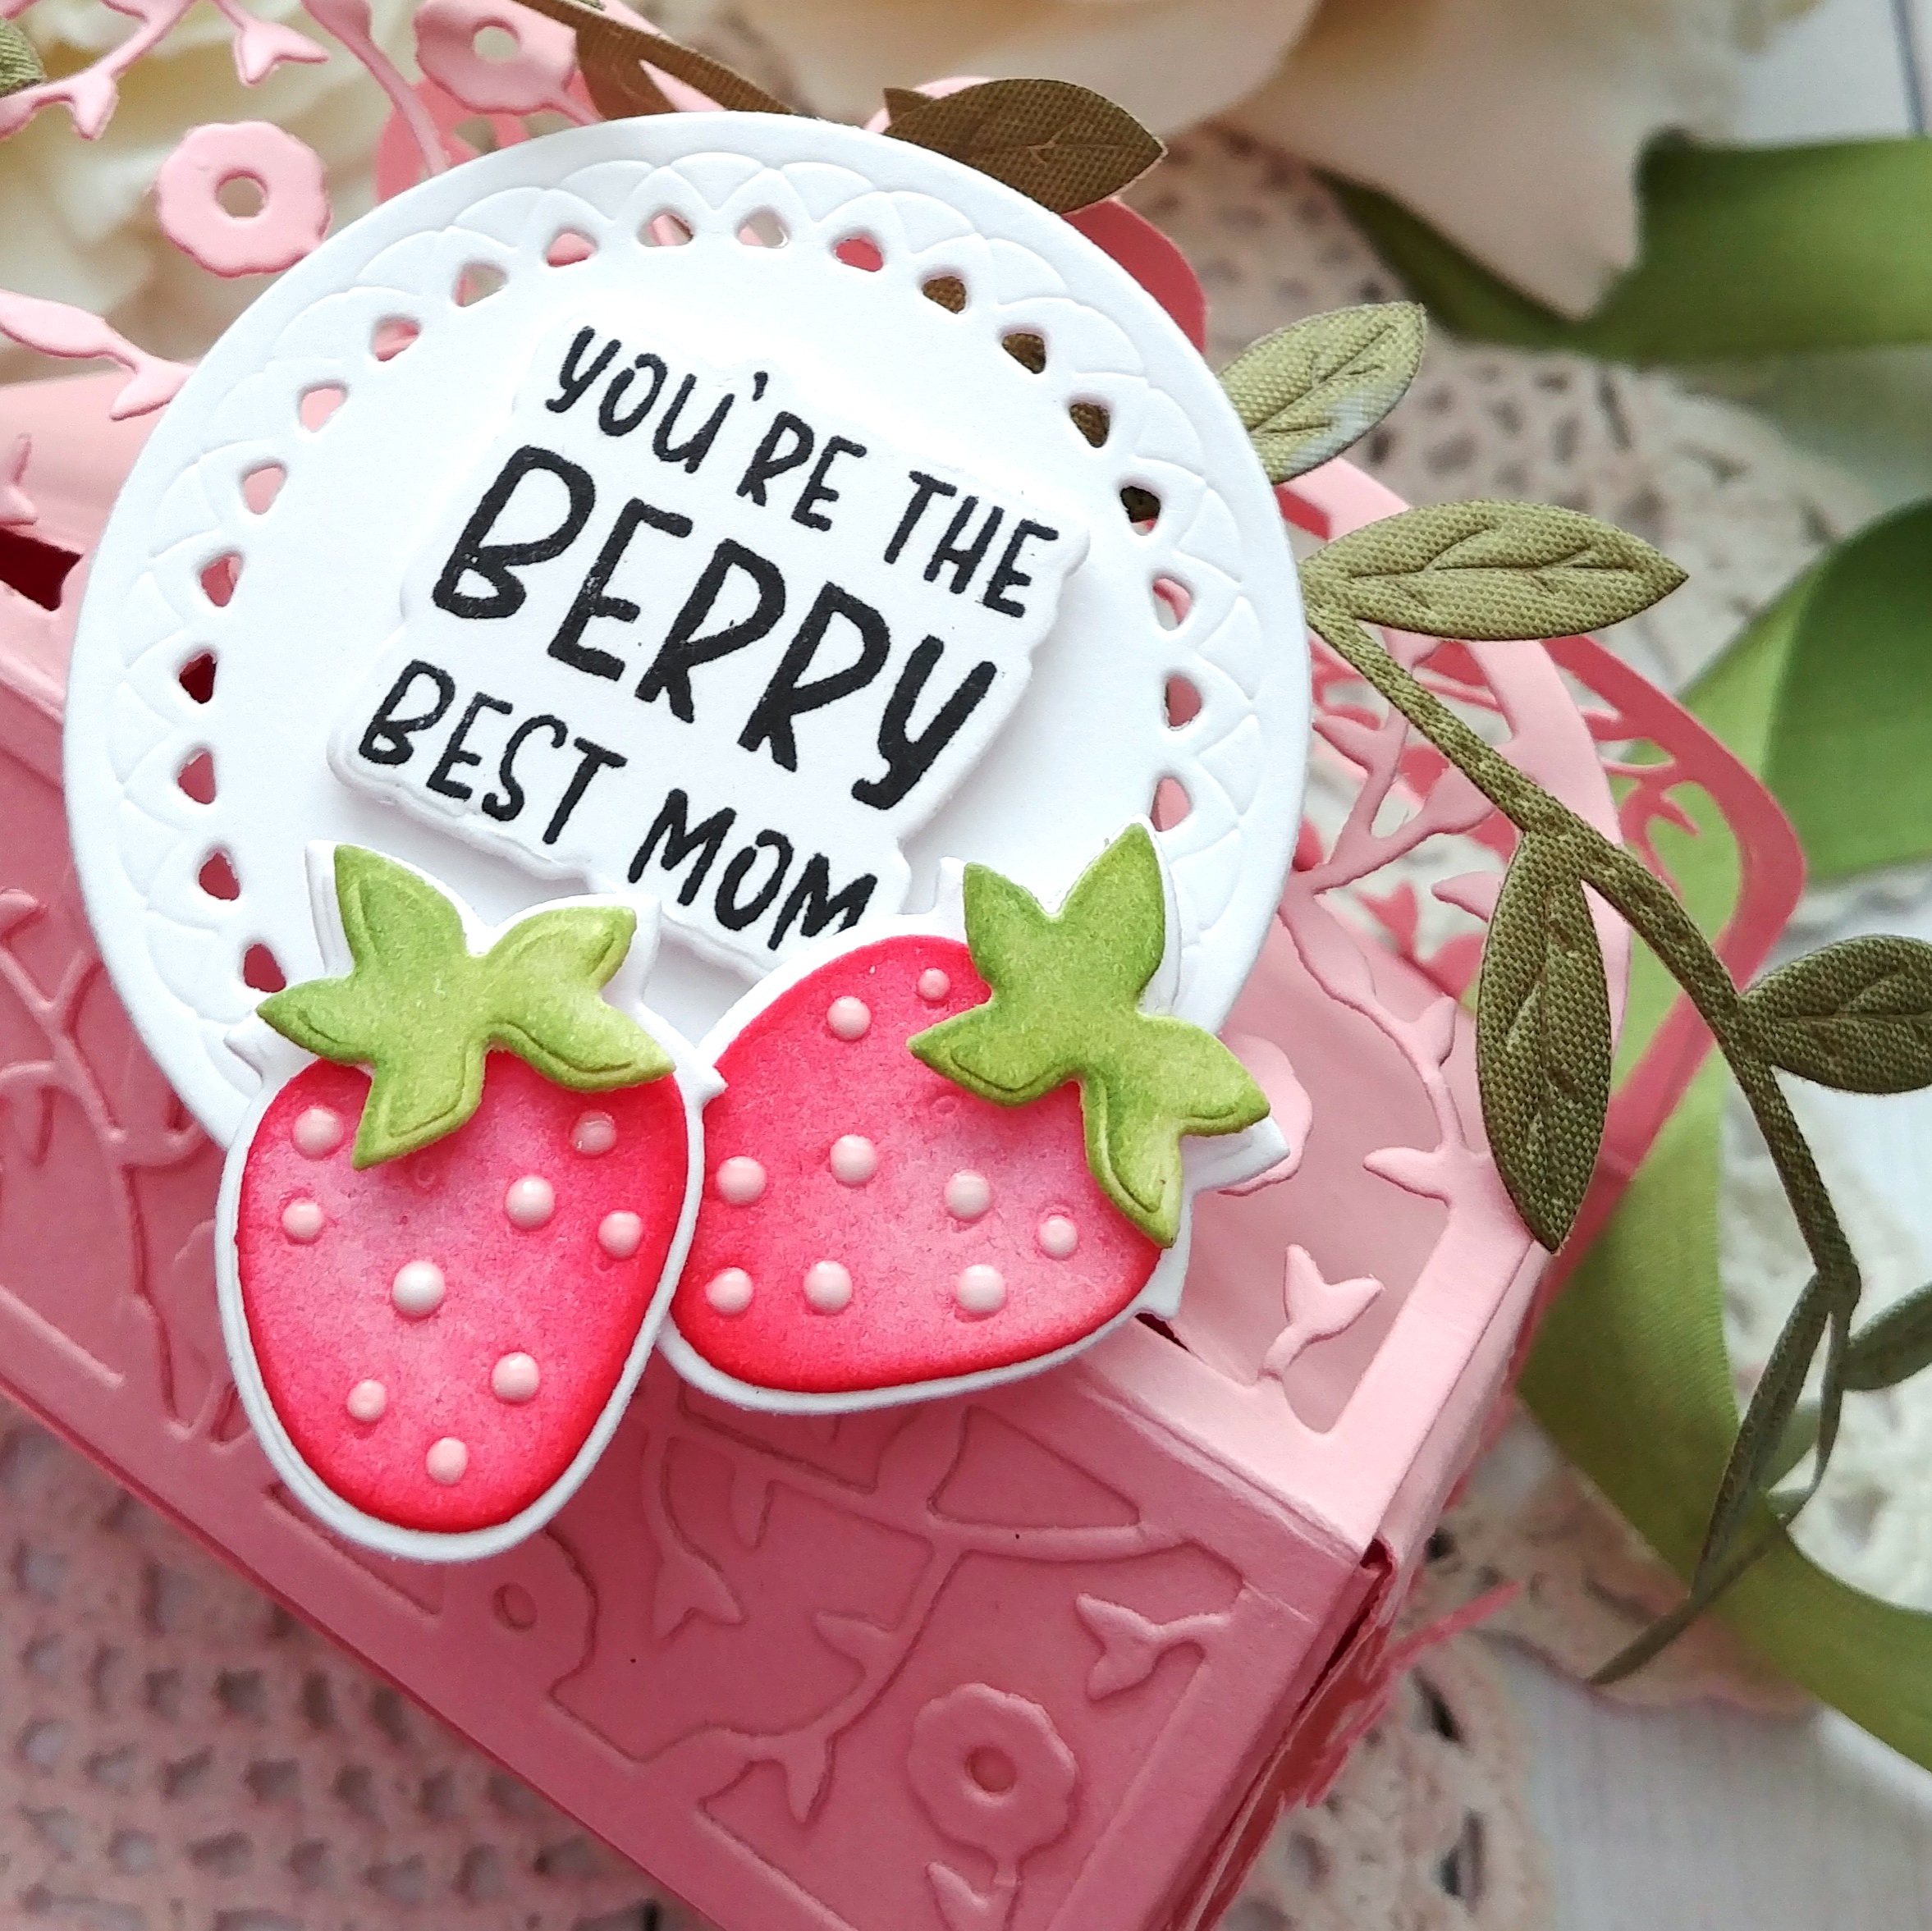 Berry Best Mom Mini Stamp Set